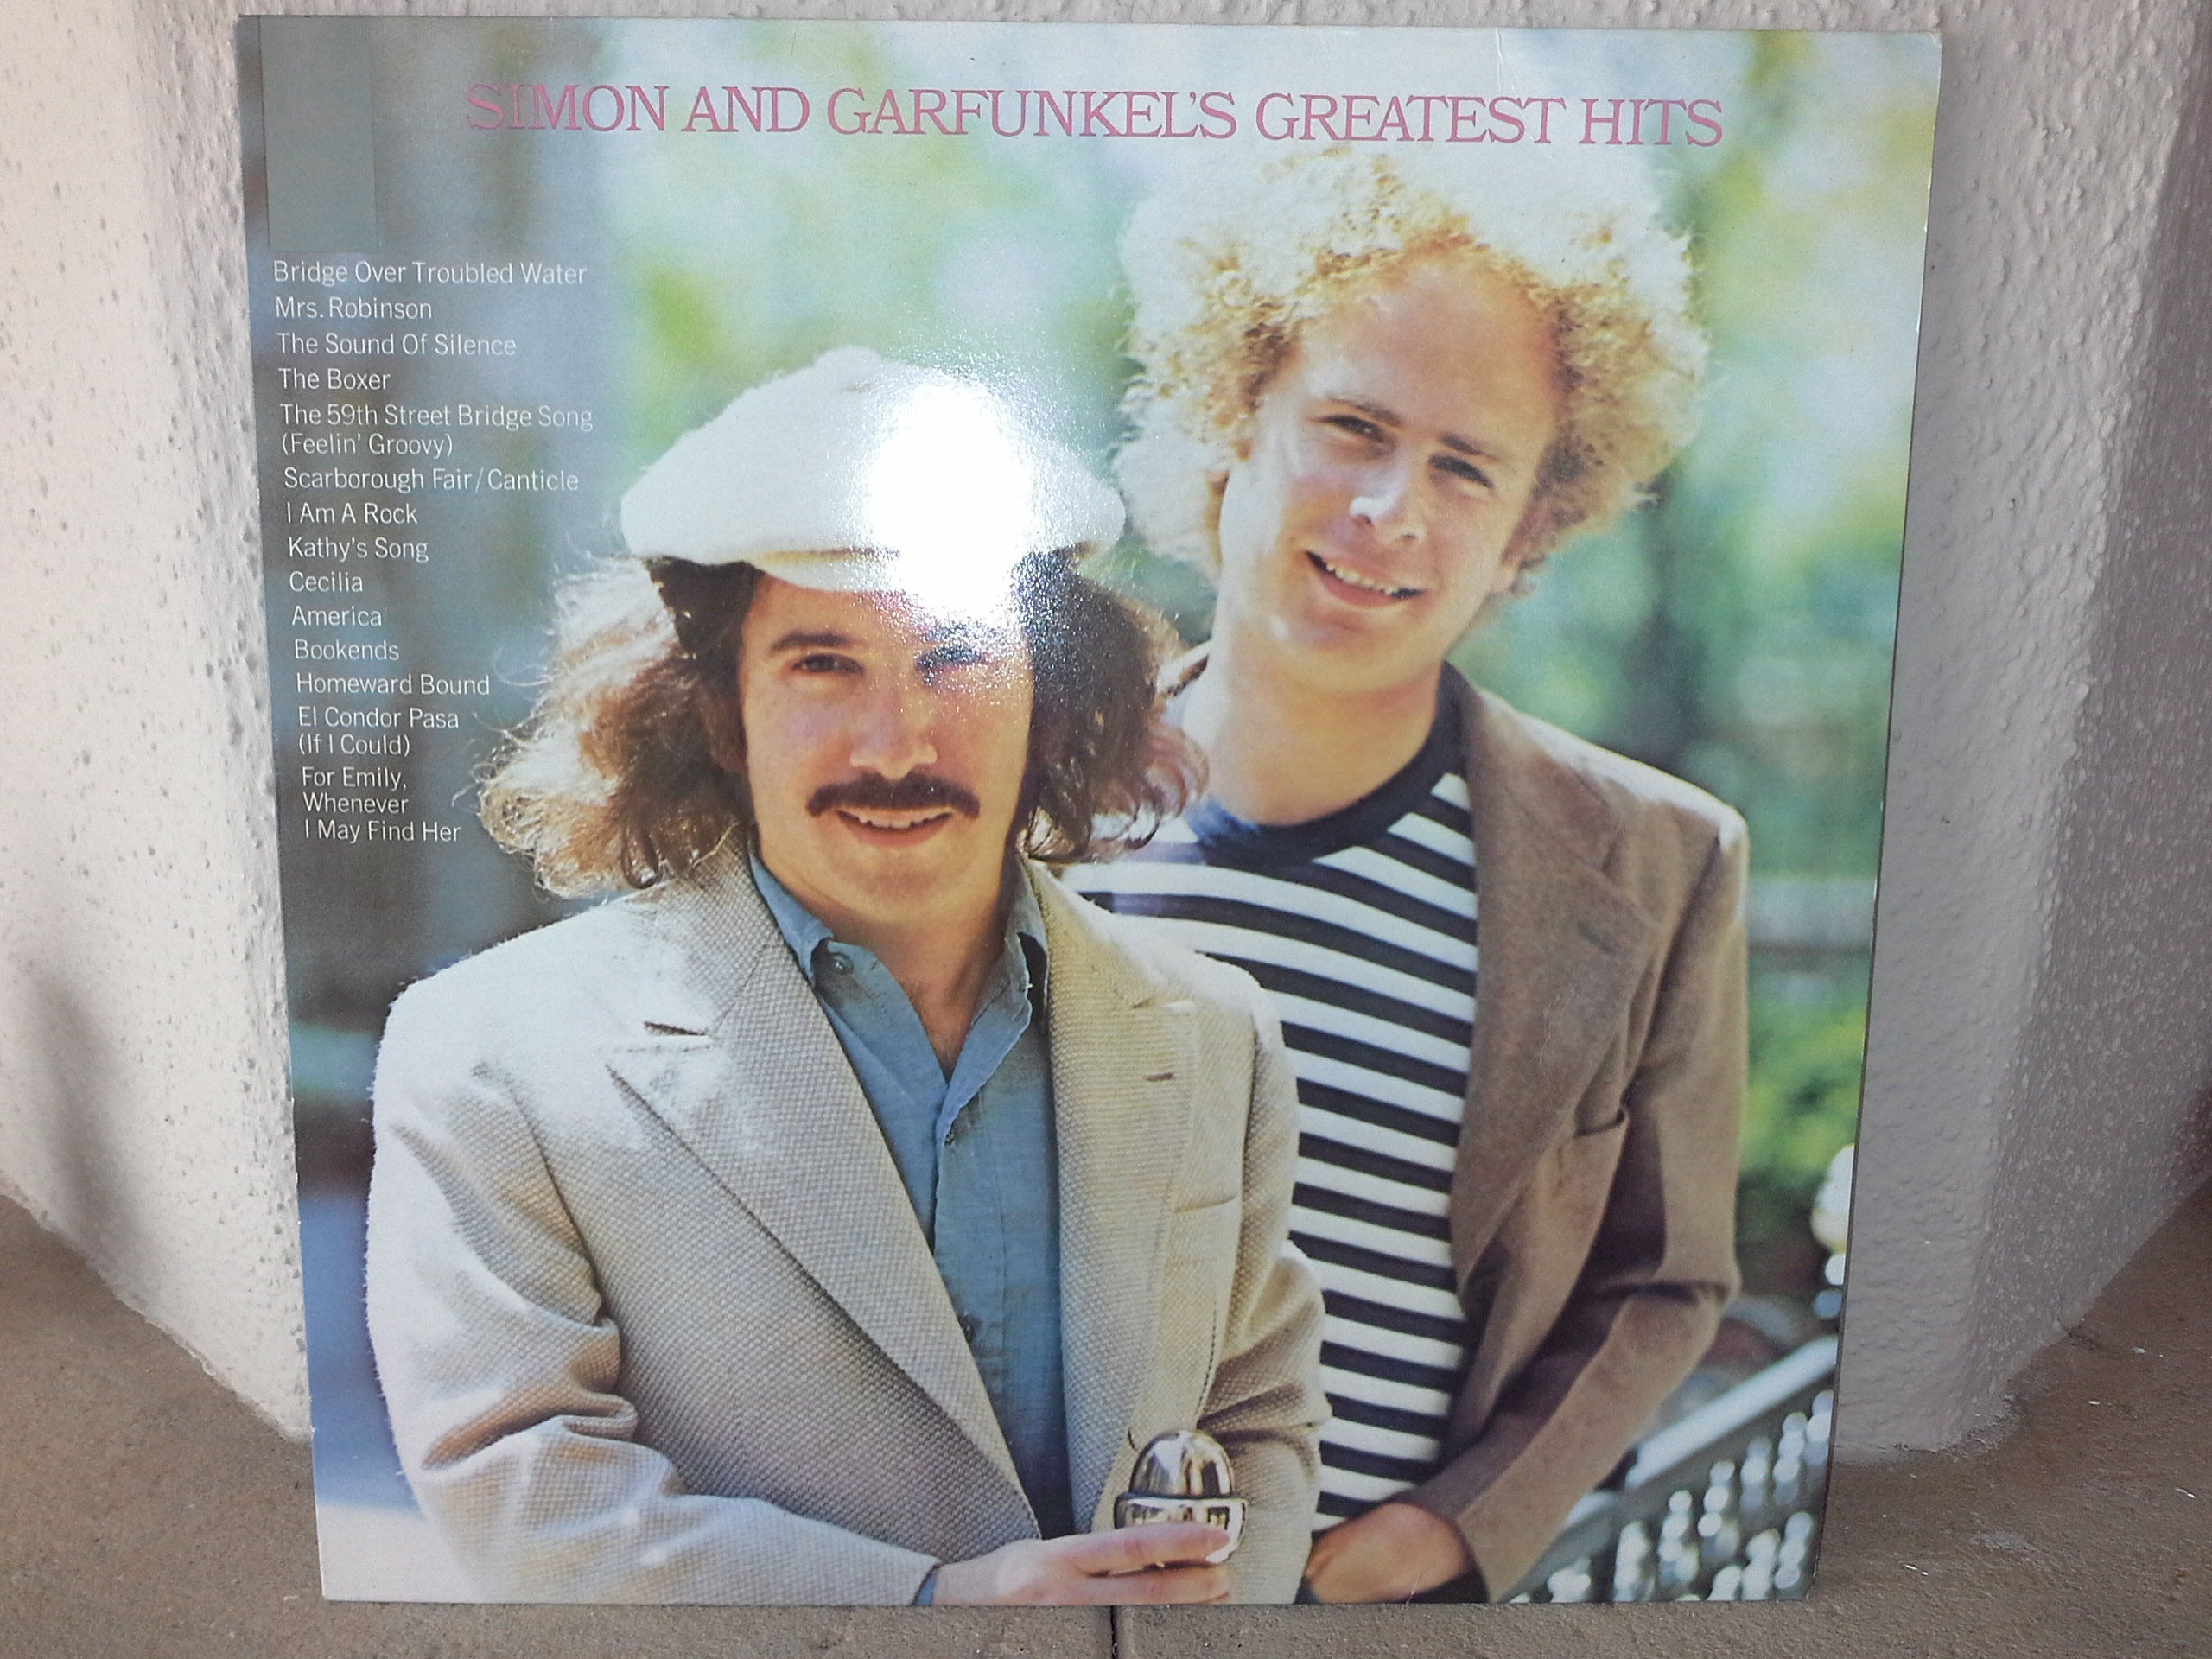 Simon and Garfunkel`s Greatest Hits